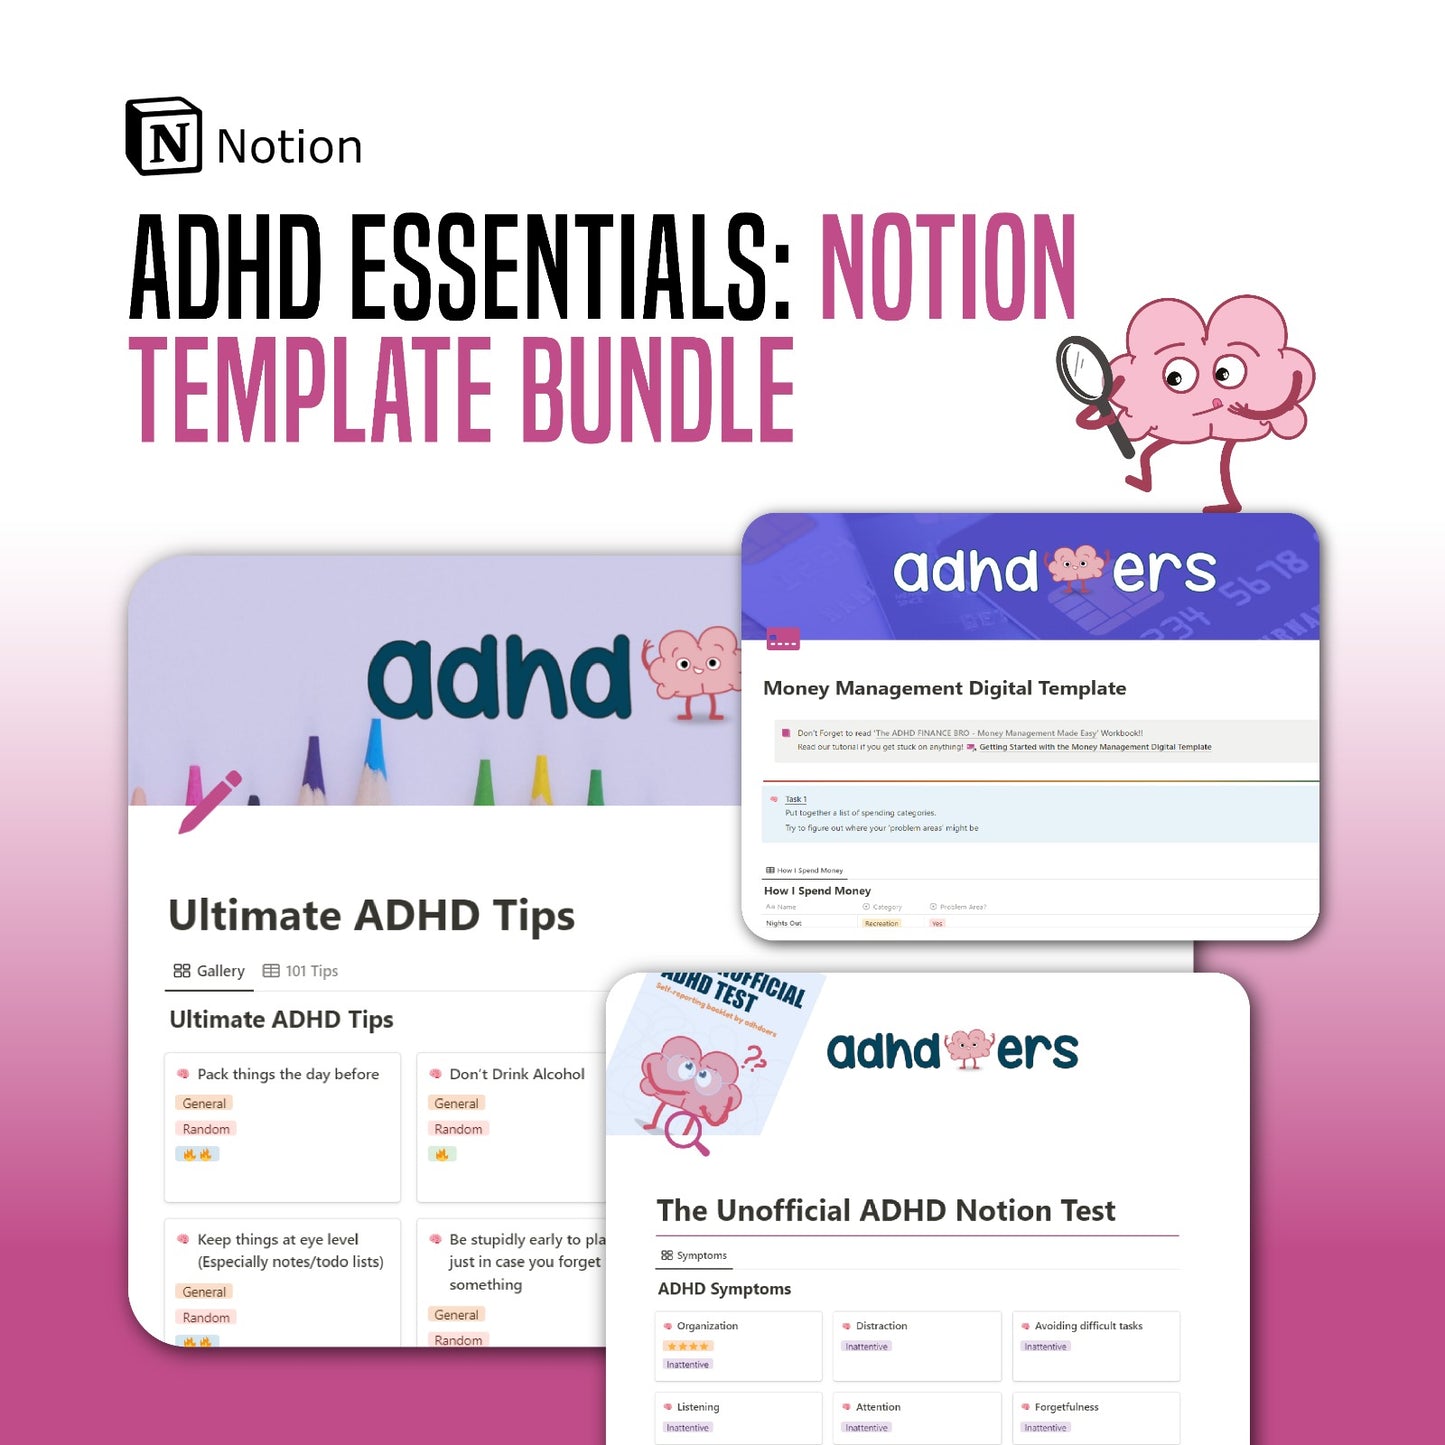 TDAH Essentials: Notion Template Bundle